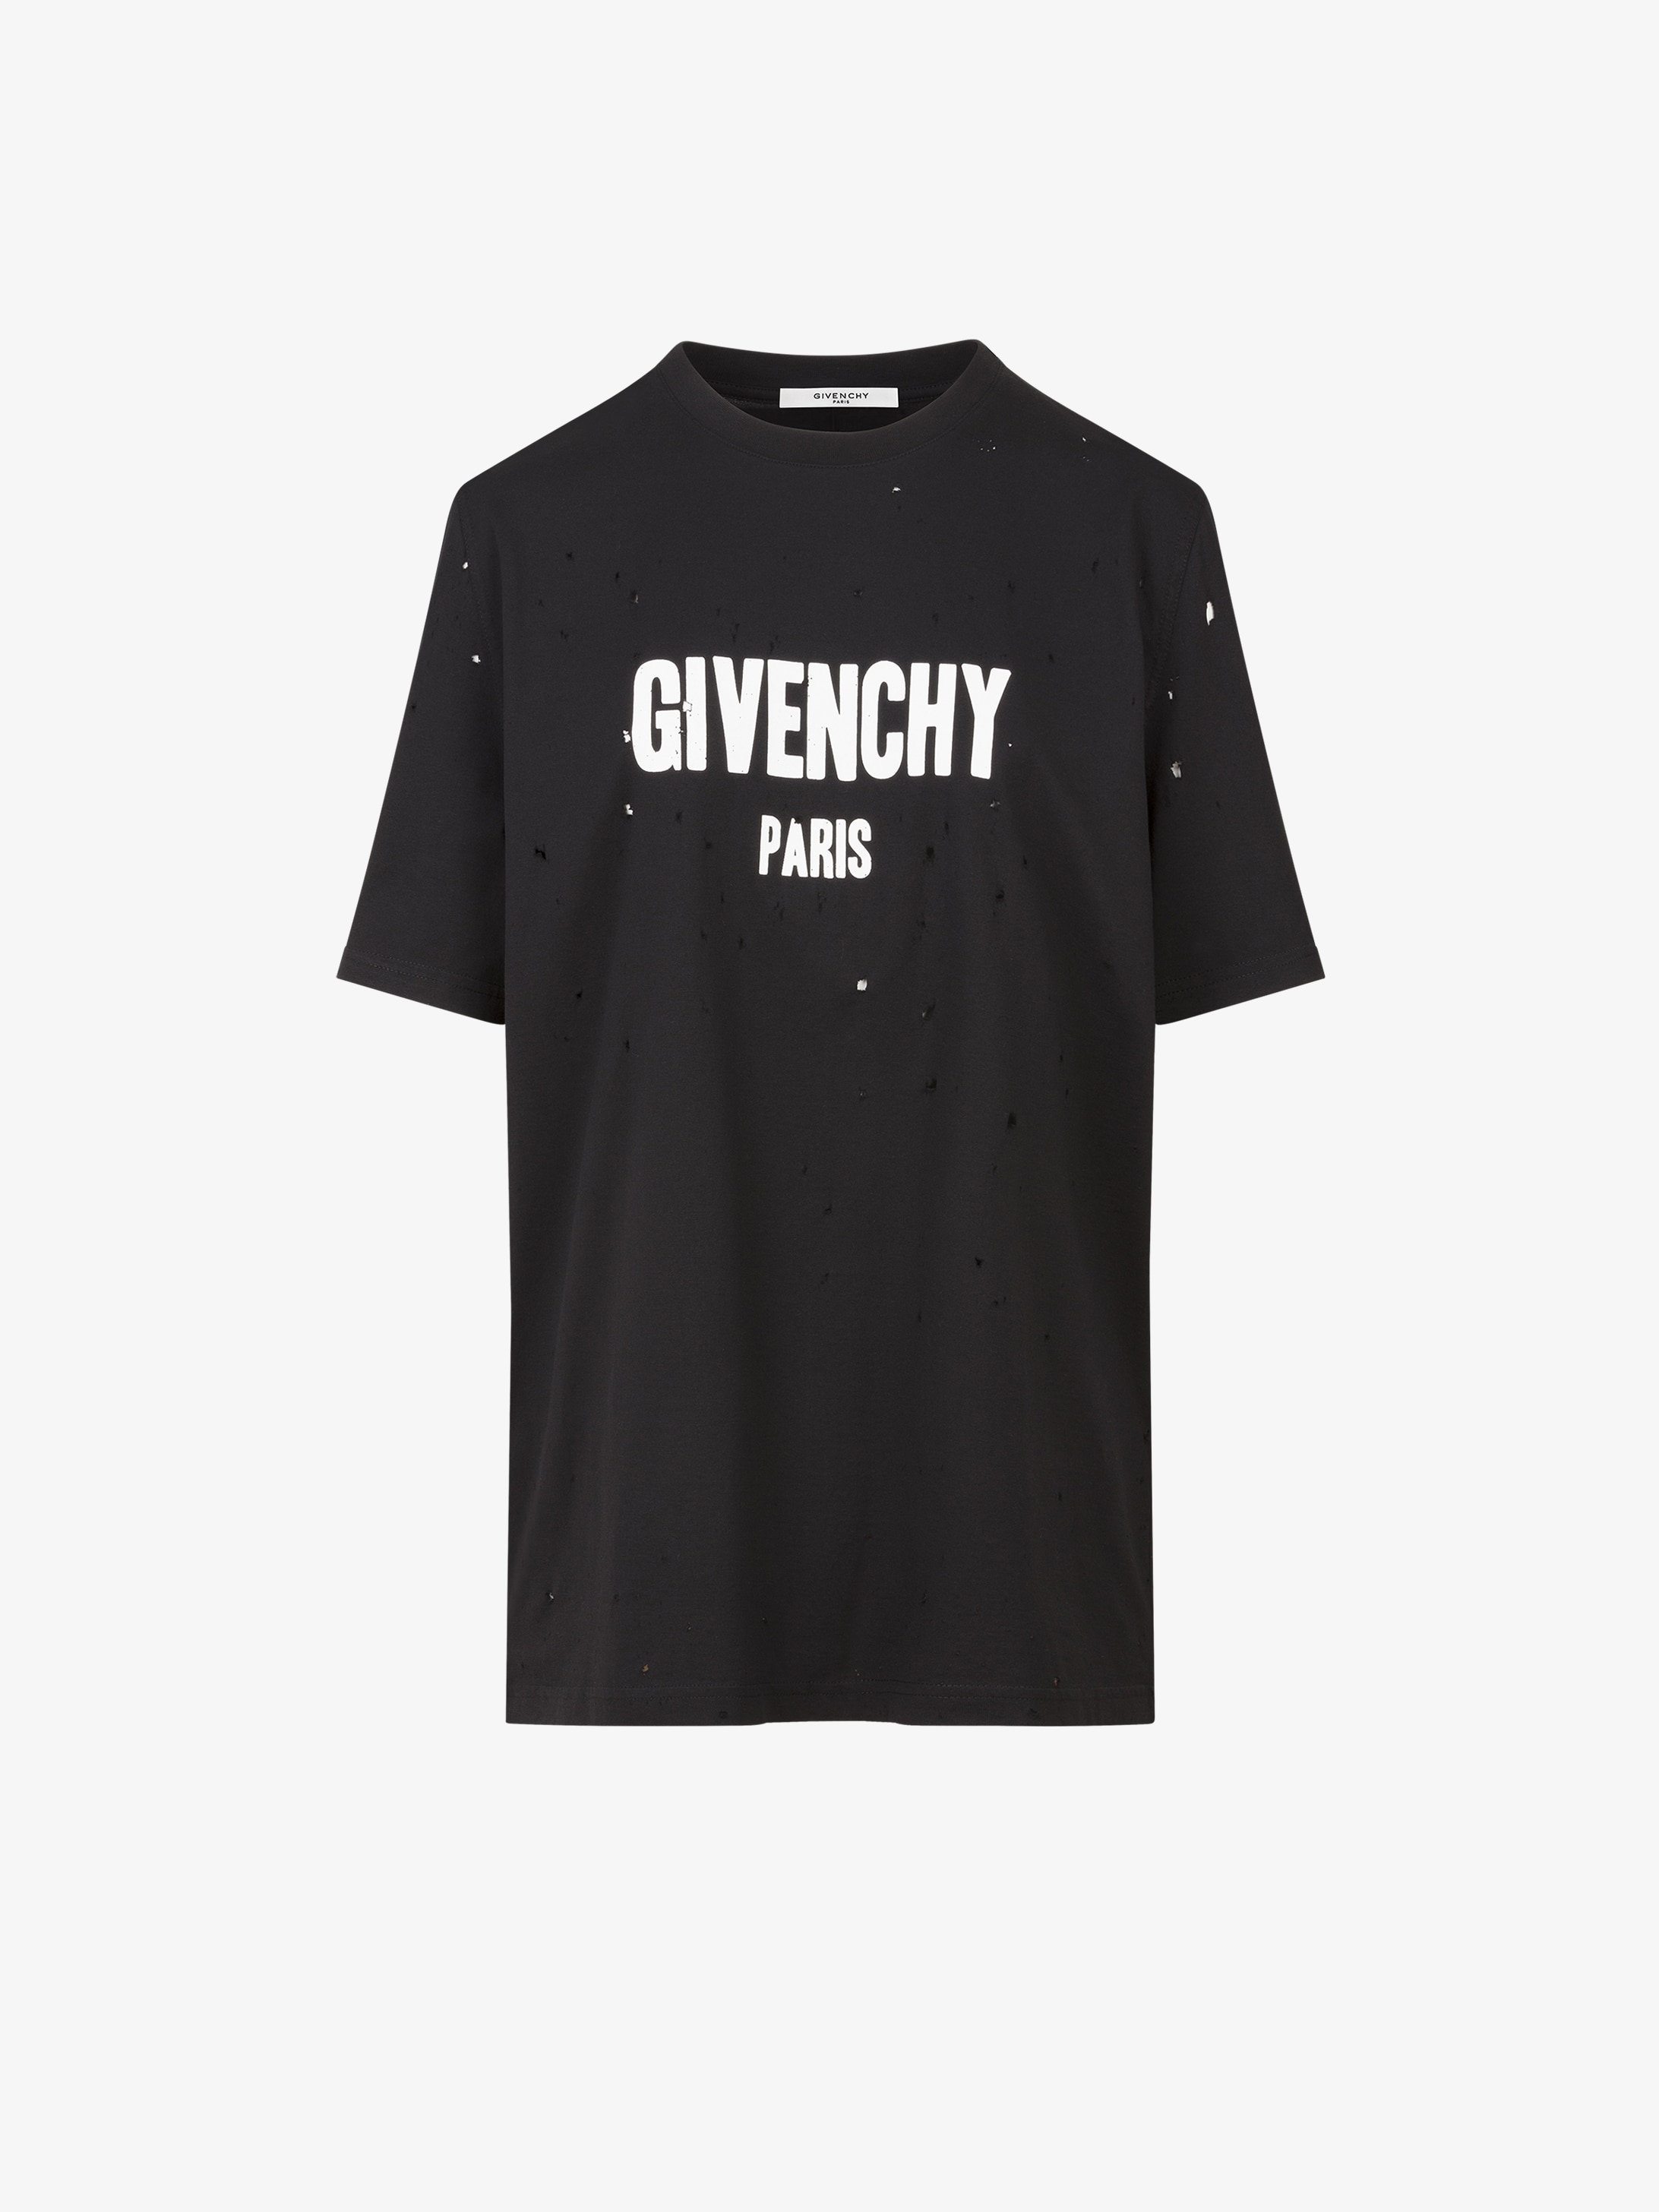 Givenchy PARIS destroyed T-shirt | GIVENCHY Paris